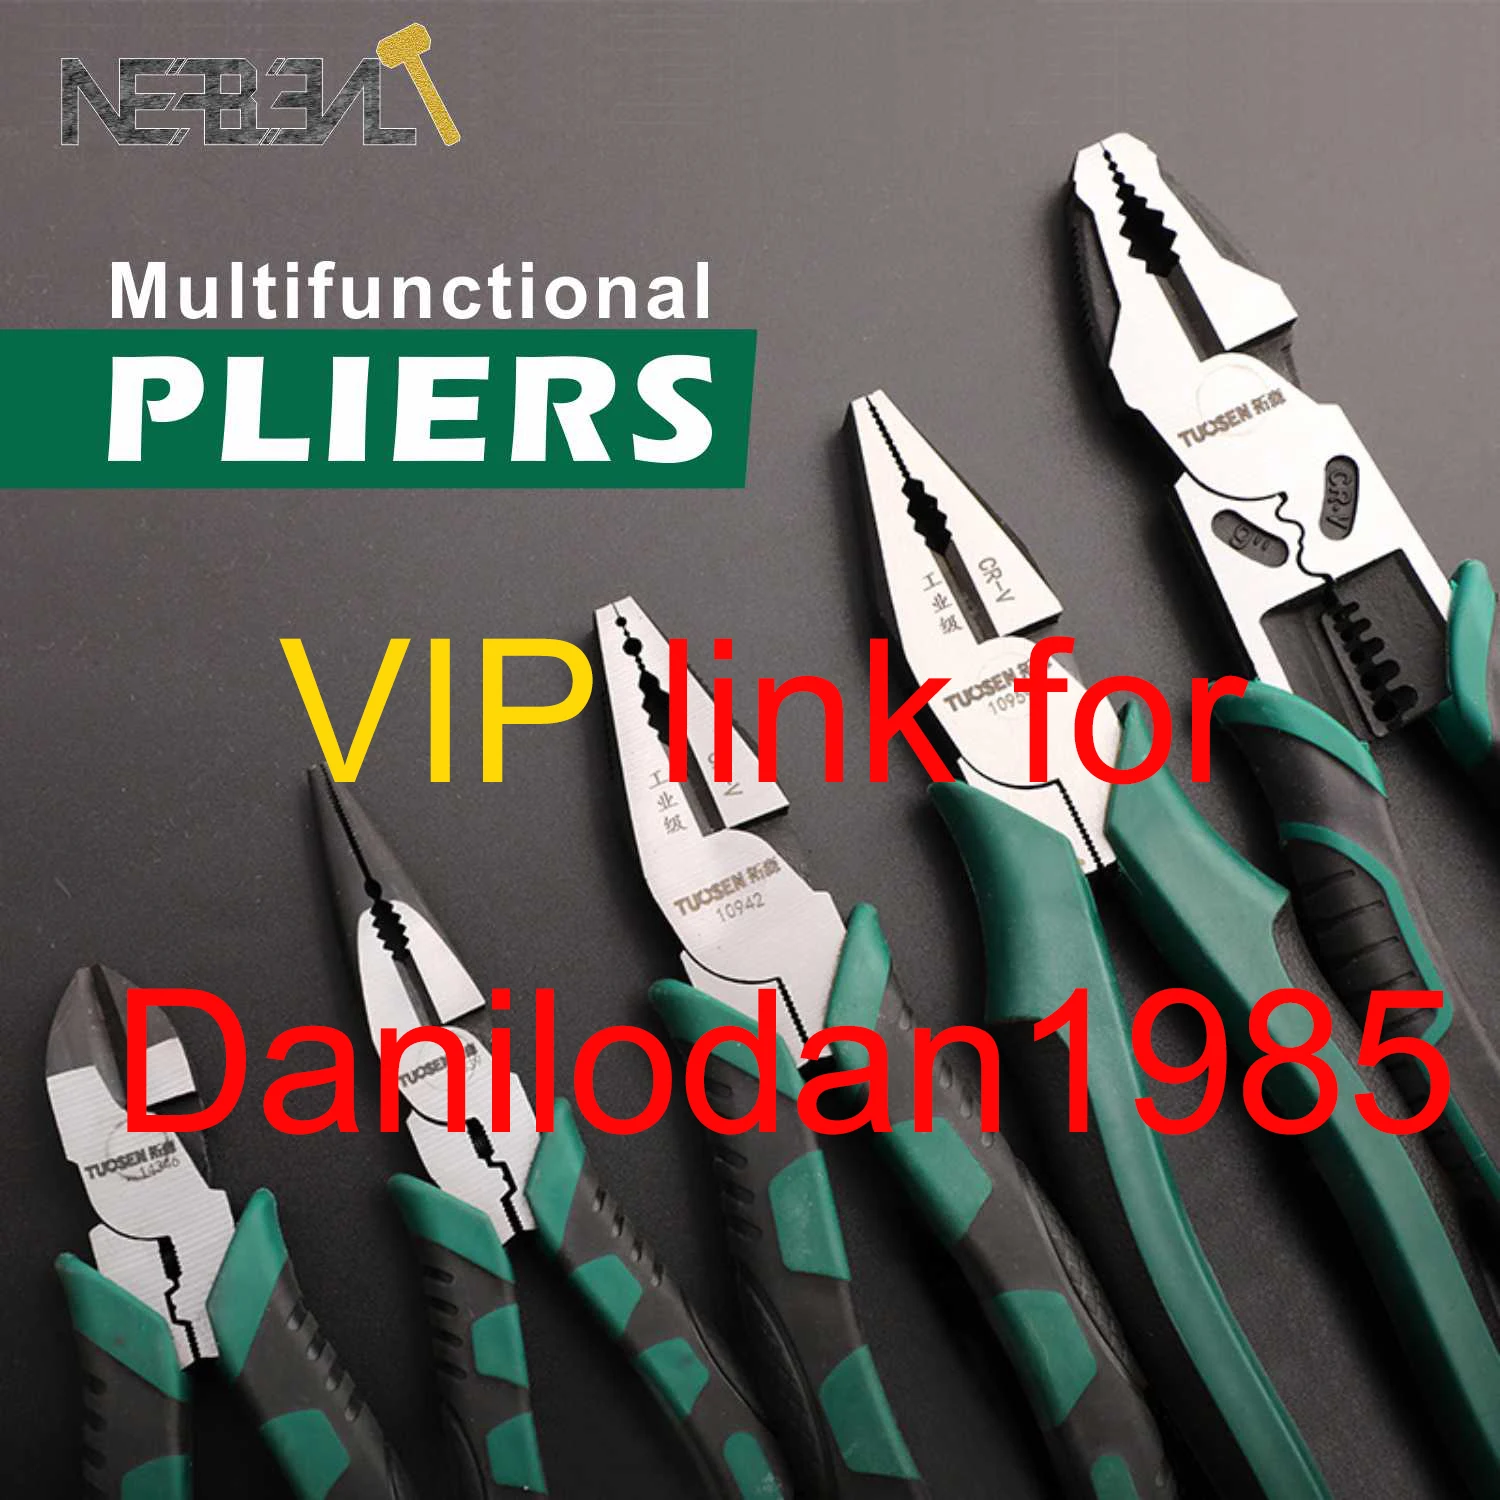 6''/8''/9'' Multifunction Pliers Set Combination Needle Nose Pliers Stripper/Crimper/Cutter VIP link for Danilodan1985